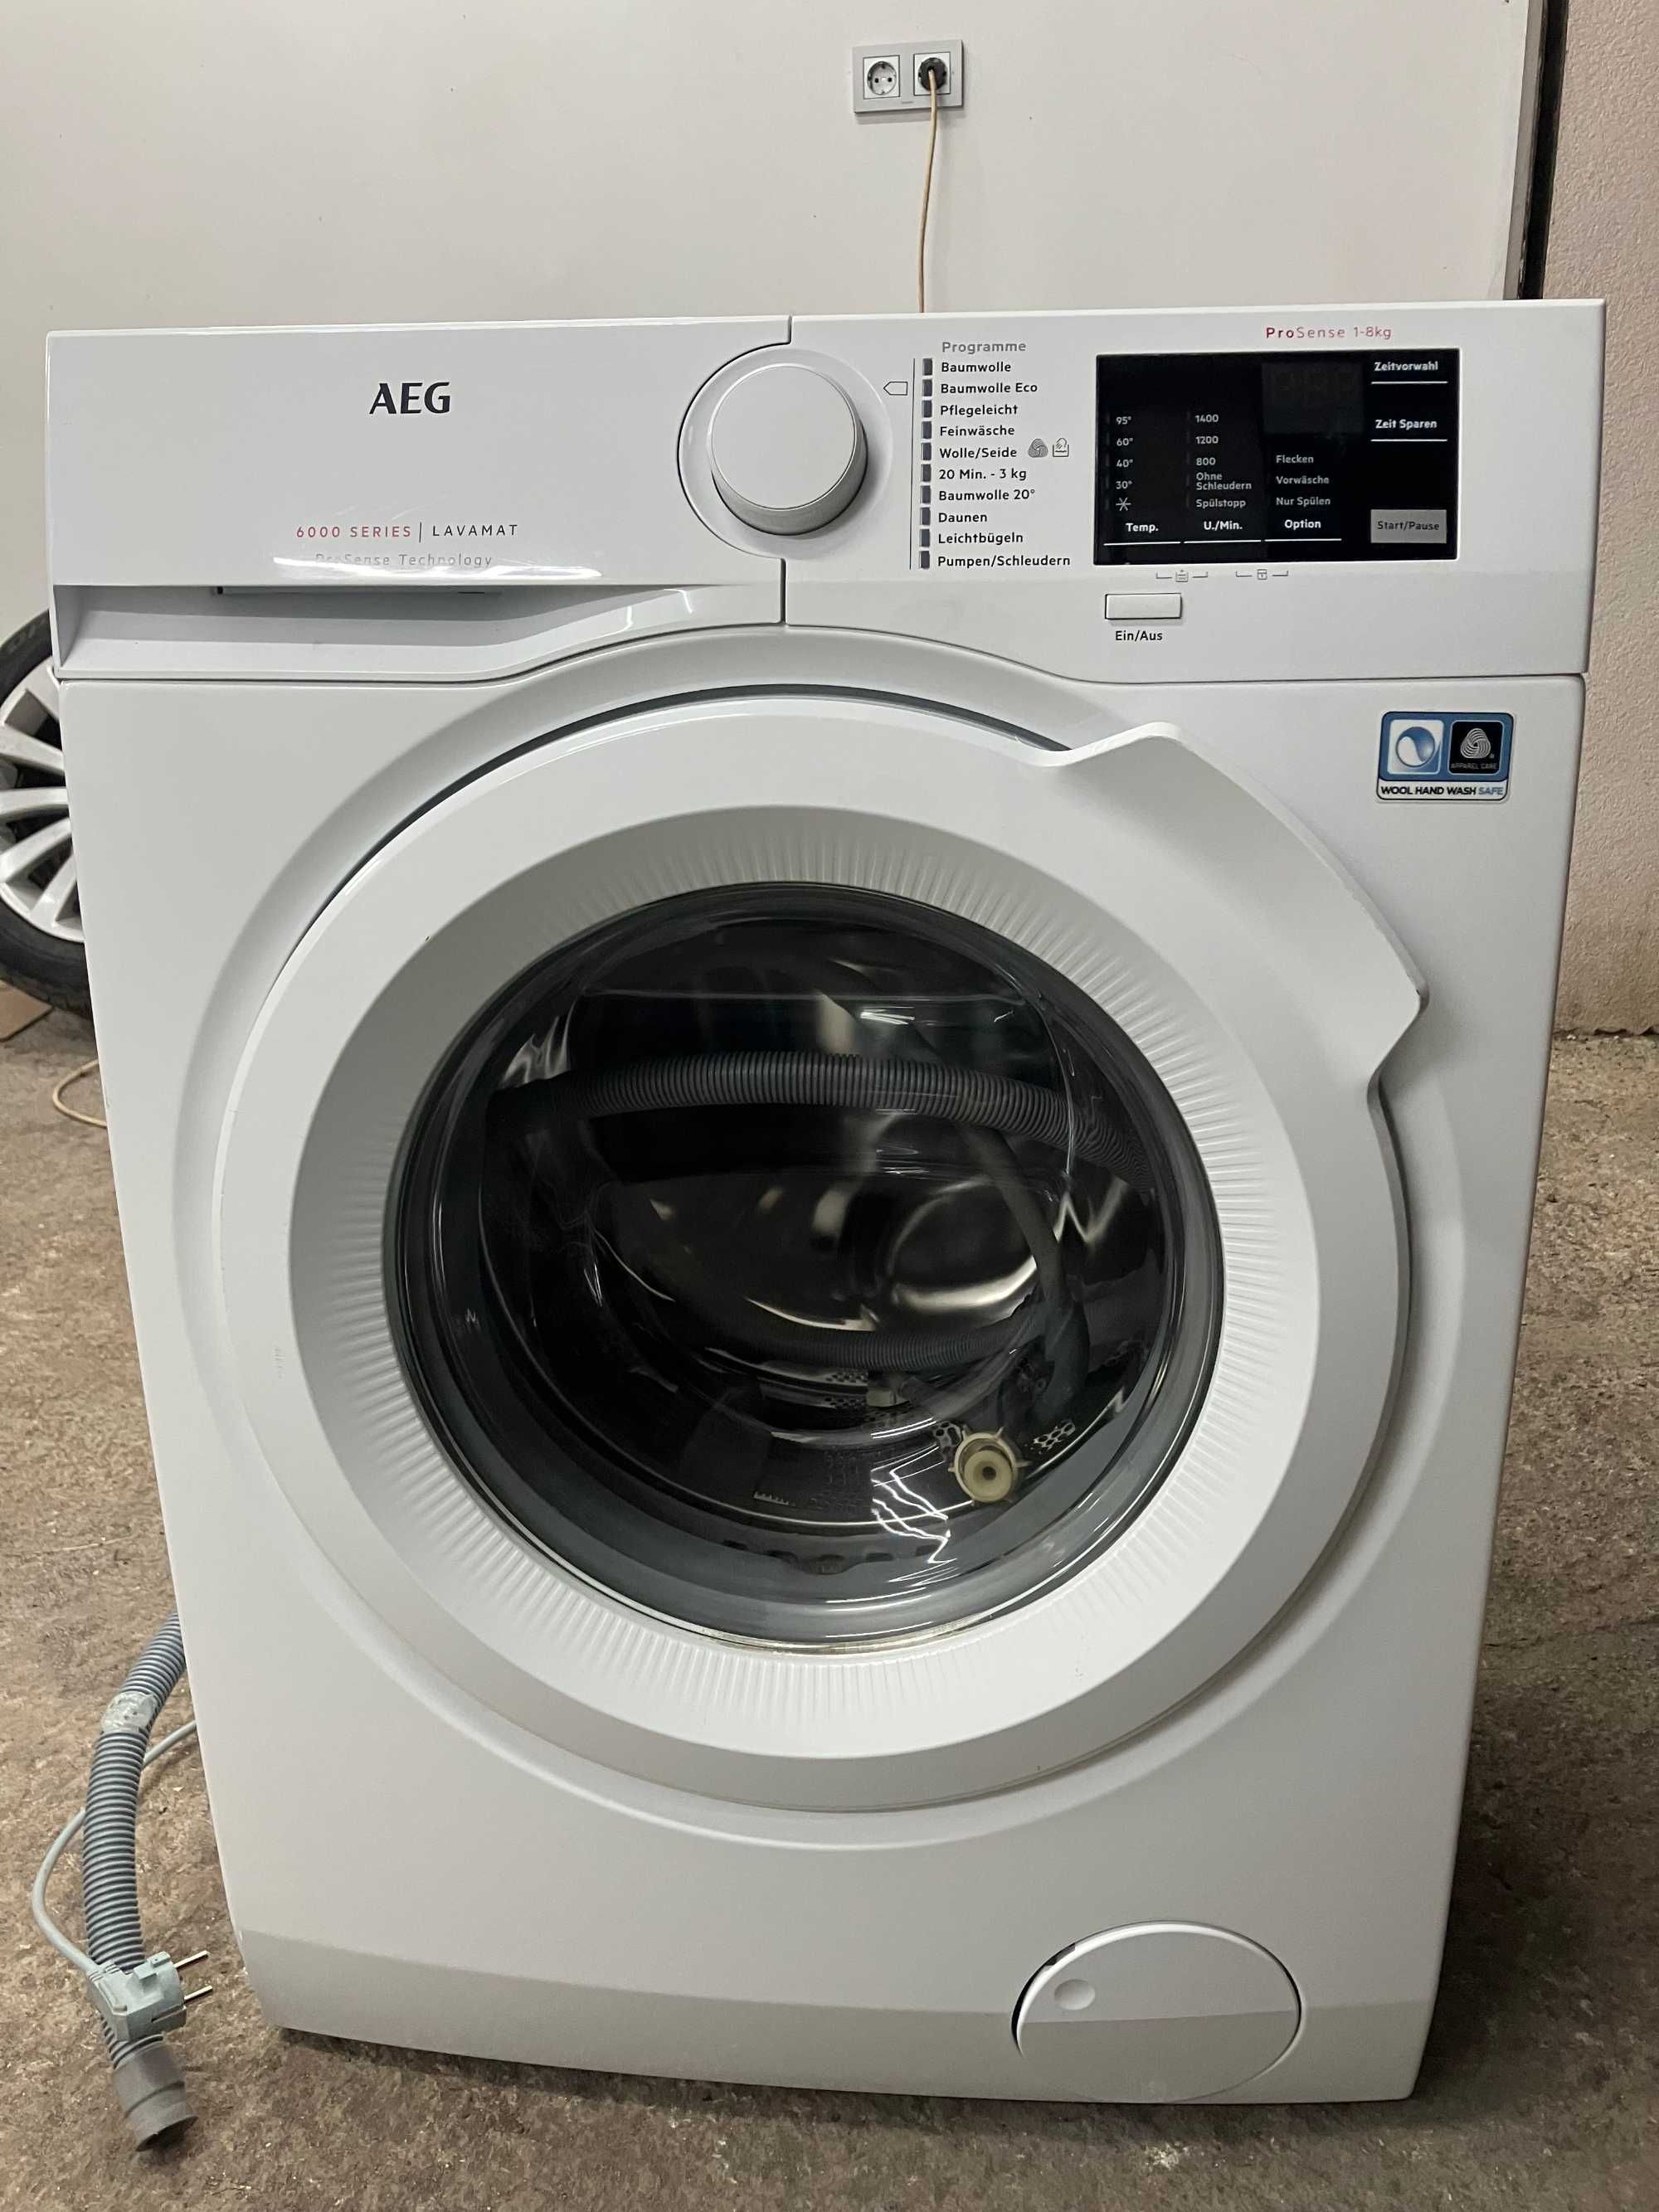 AEG 6000 lavamat prosense technology